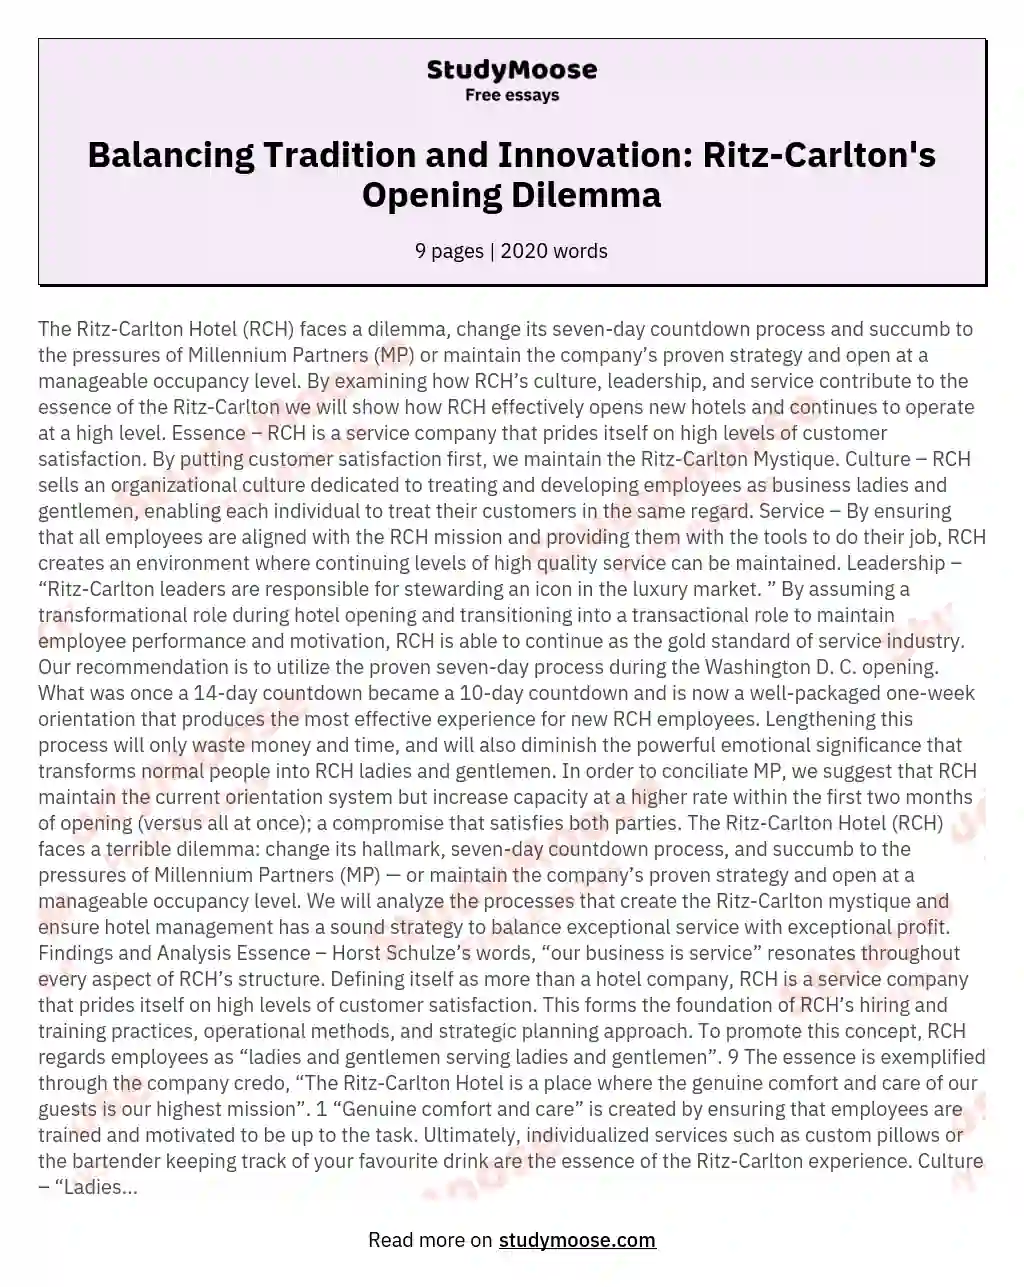 Balancing Tradition and Innovation: Ritz-Carlton's Opening Dilemma essay